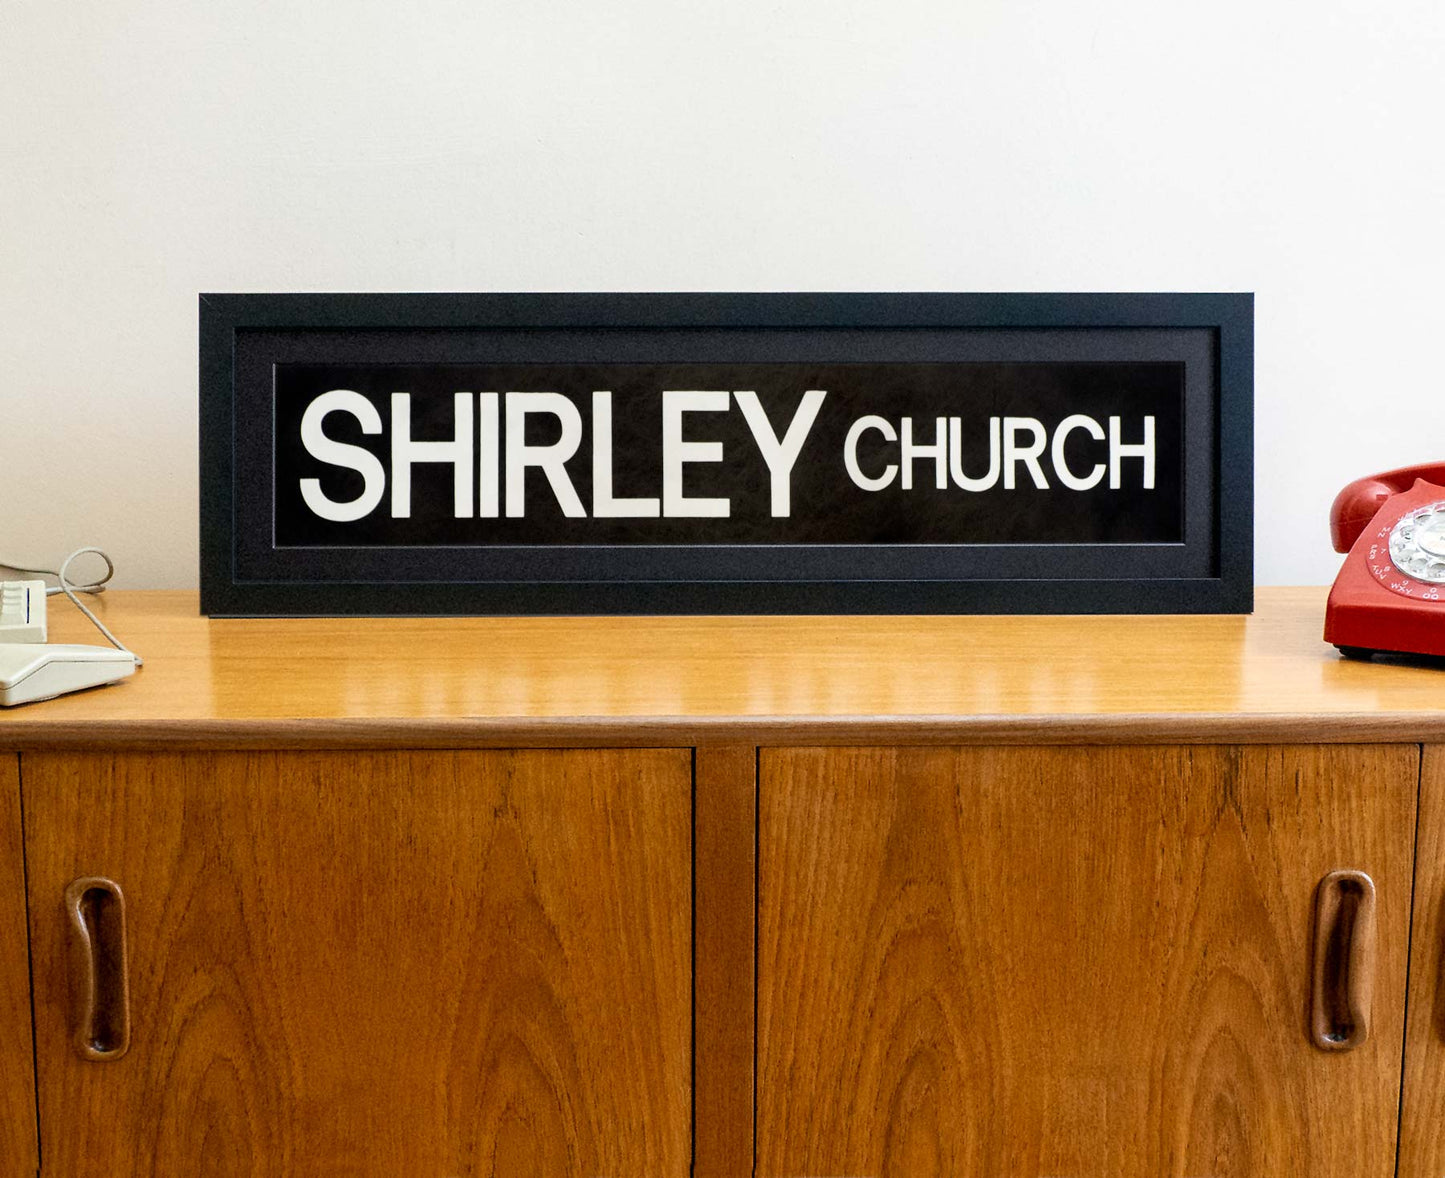 Shirley Church 1990s framed original bus blind